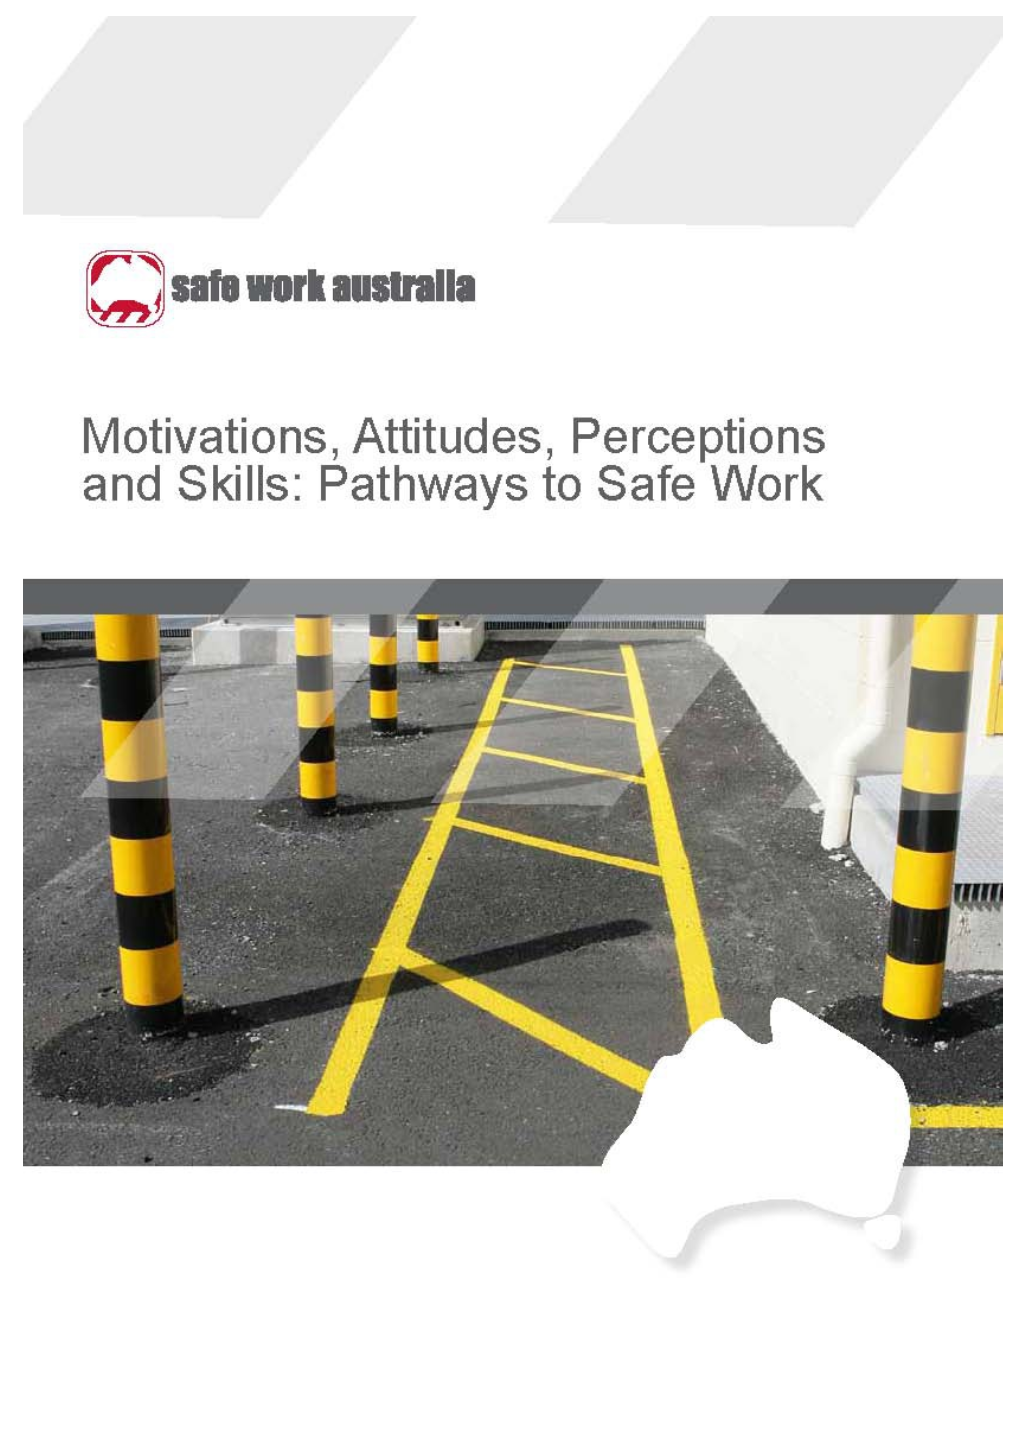 Motivation, Attitudes, Perceptions and Skills: Pathways to Safe Work